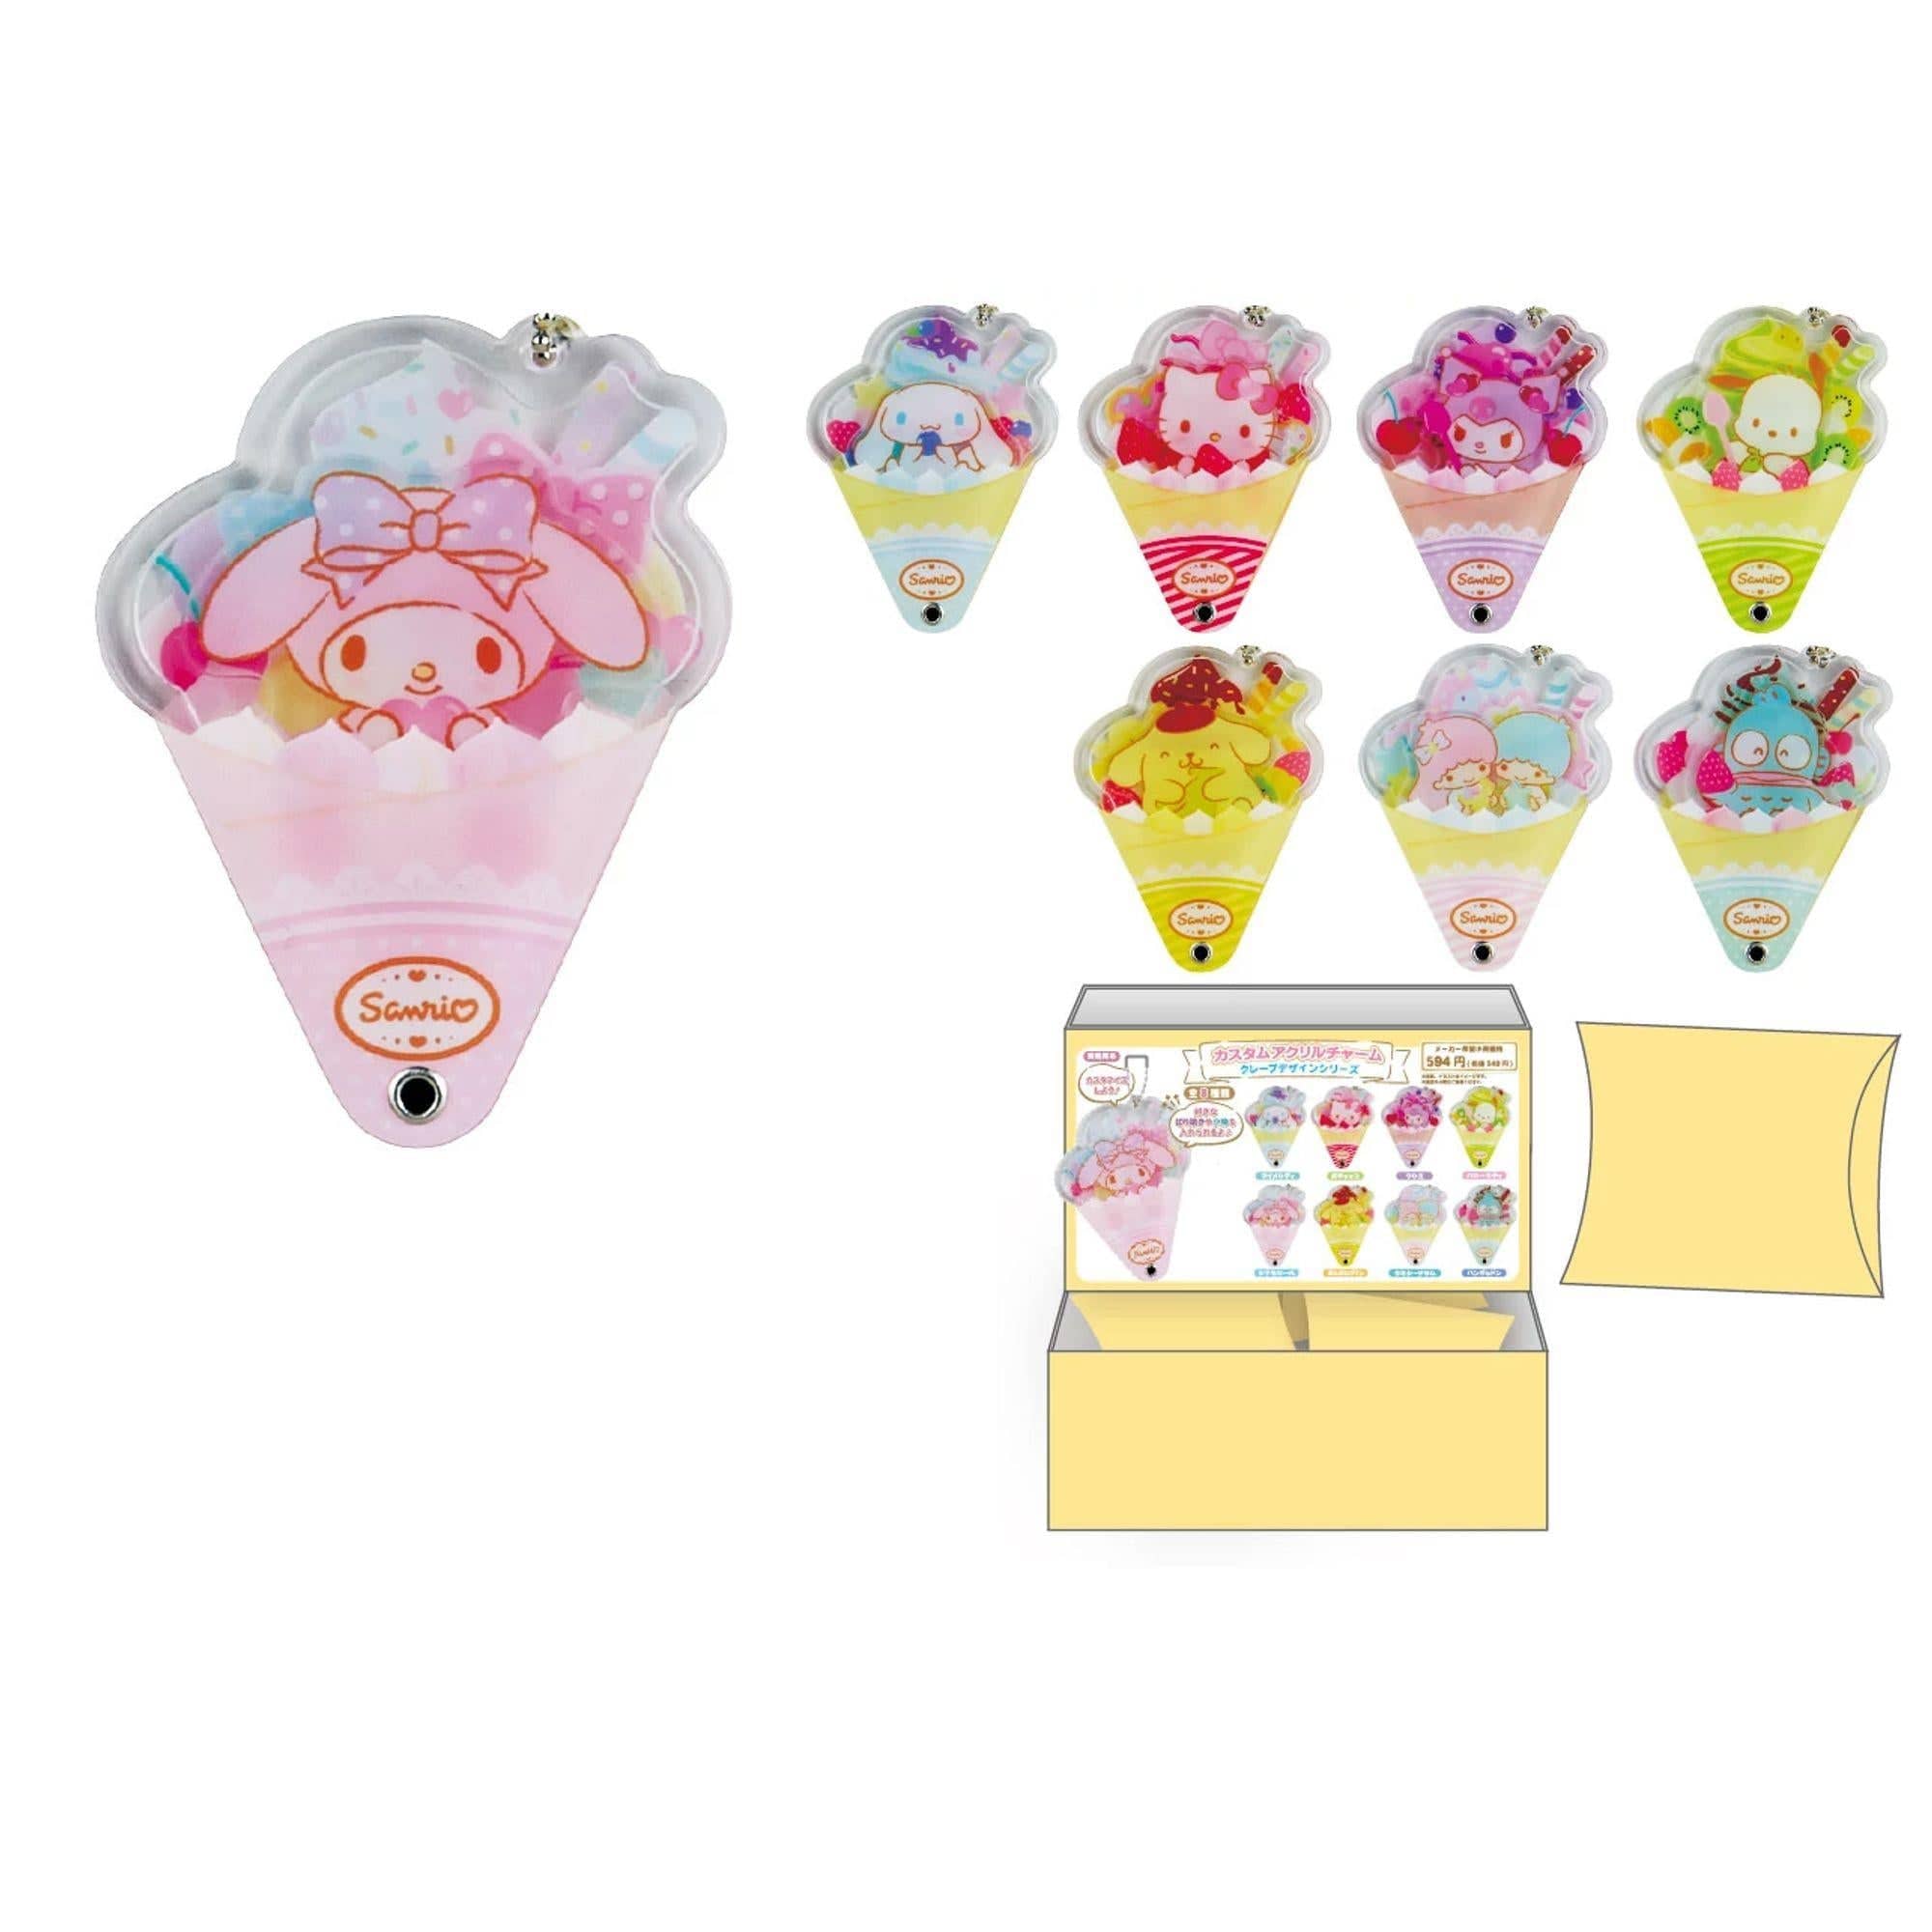 Enesco Sanrio Sweet Crepe Surprise Acrylic Charm Kawaii Gifts 4550337007754